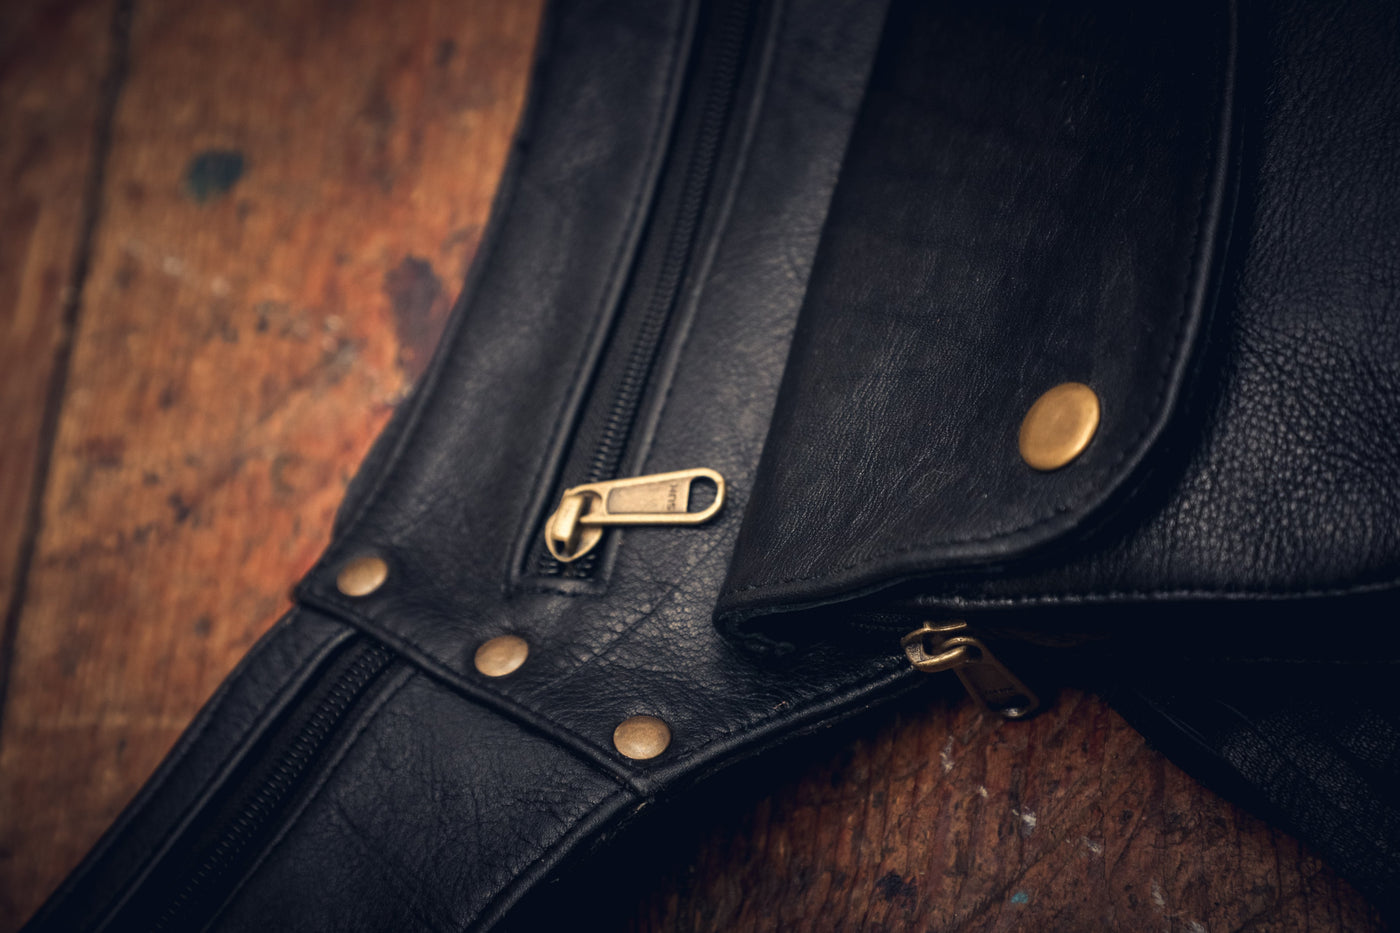 Leather Tassel Belt - ForageDesign